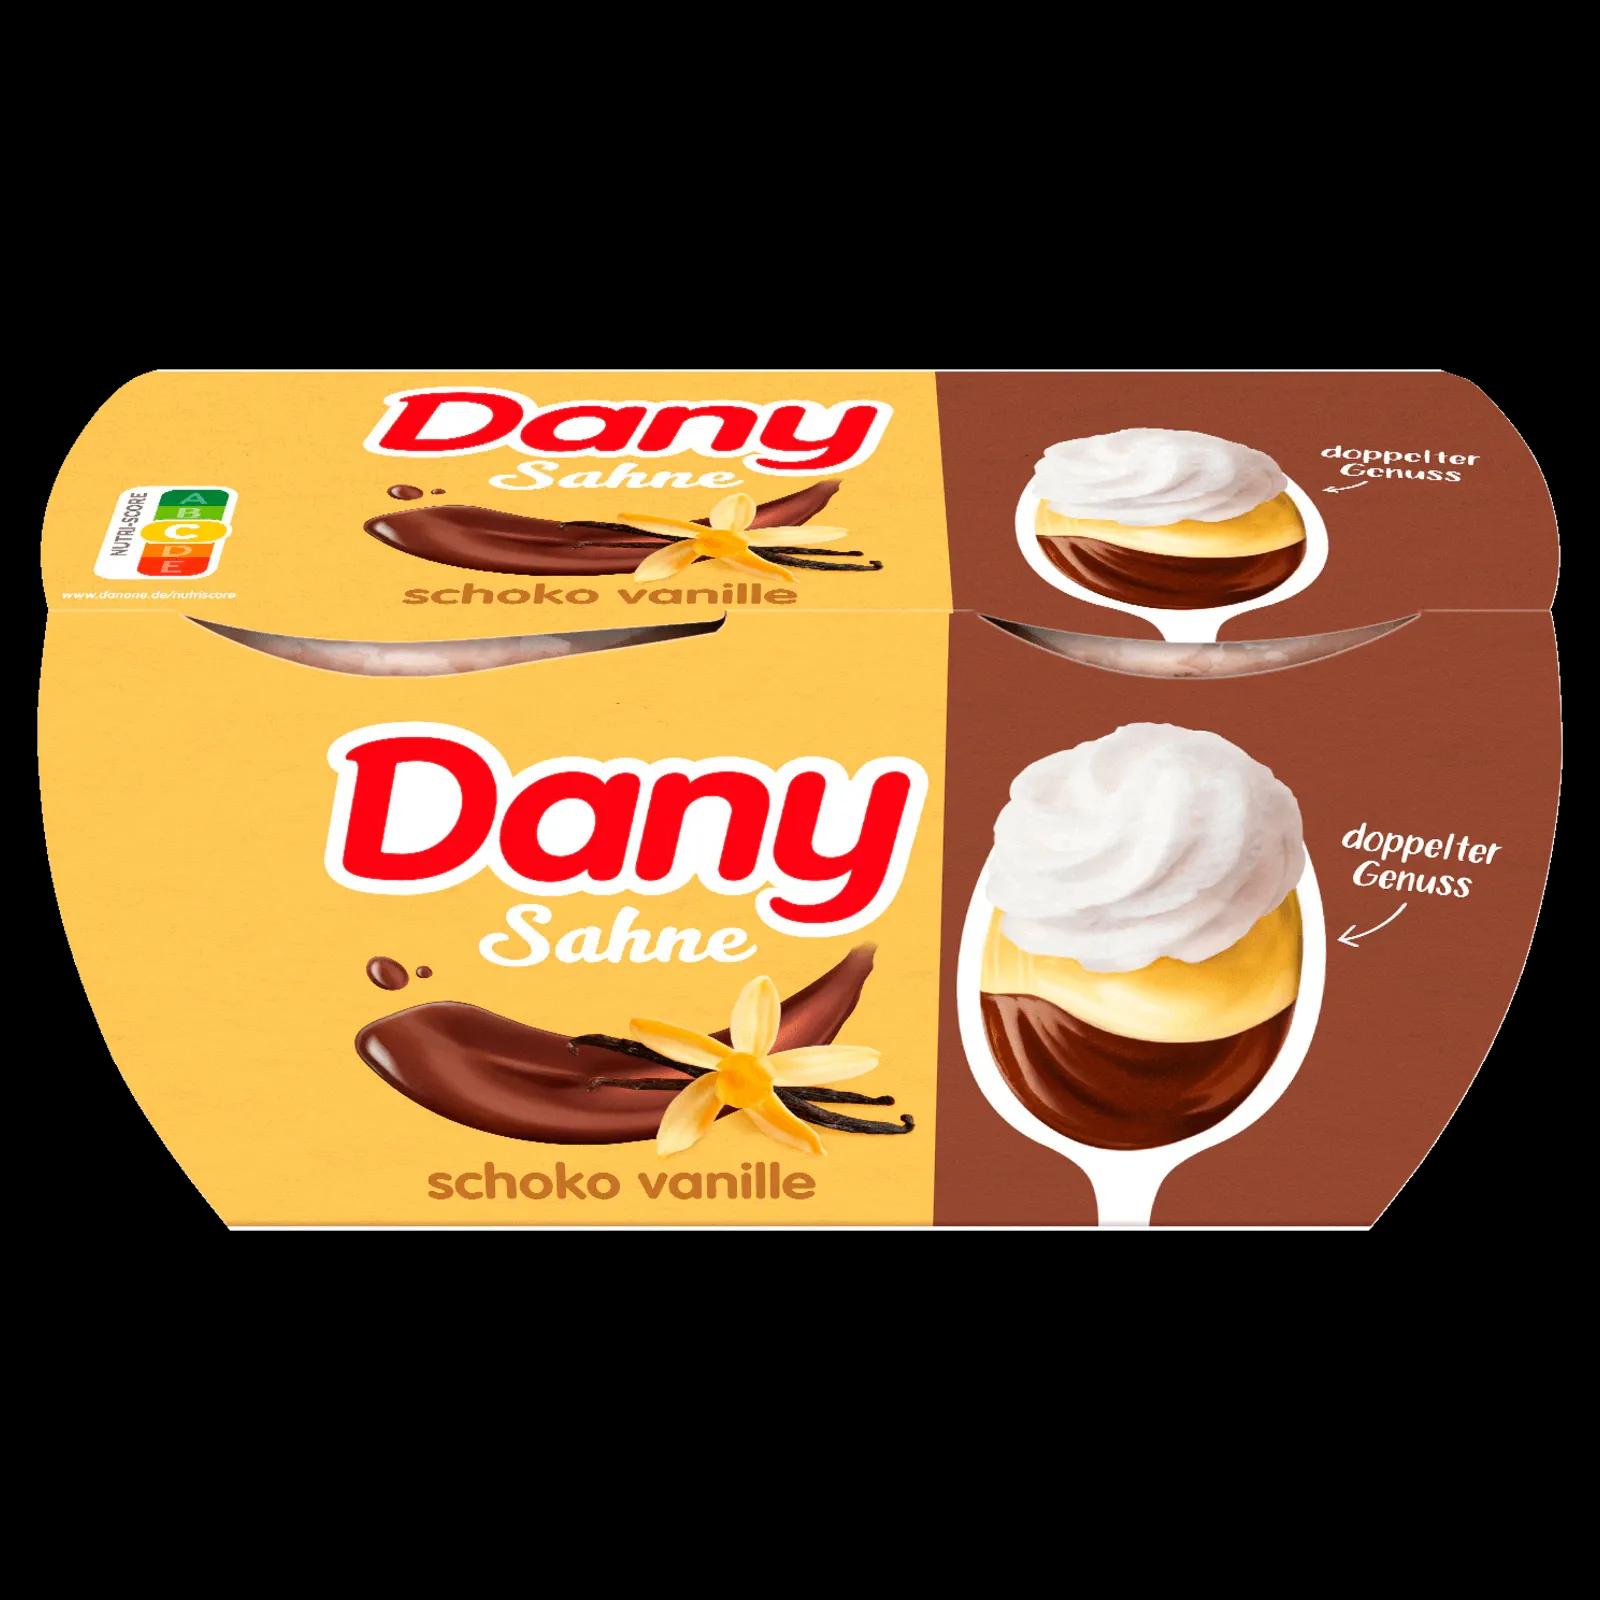 Danone Dany Sahne Pudding Schoko-Vanille 4x115g bei REWE online bestellen!